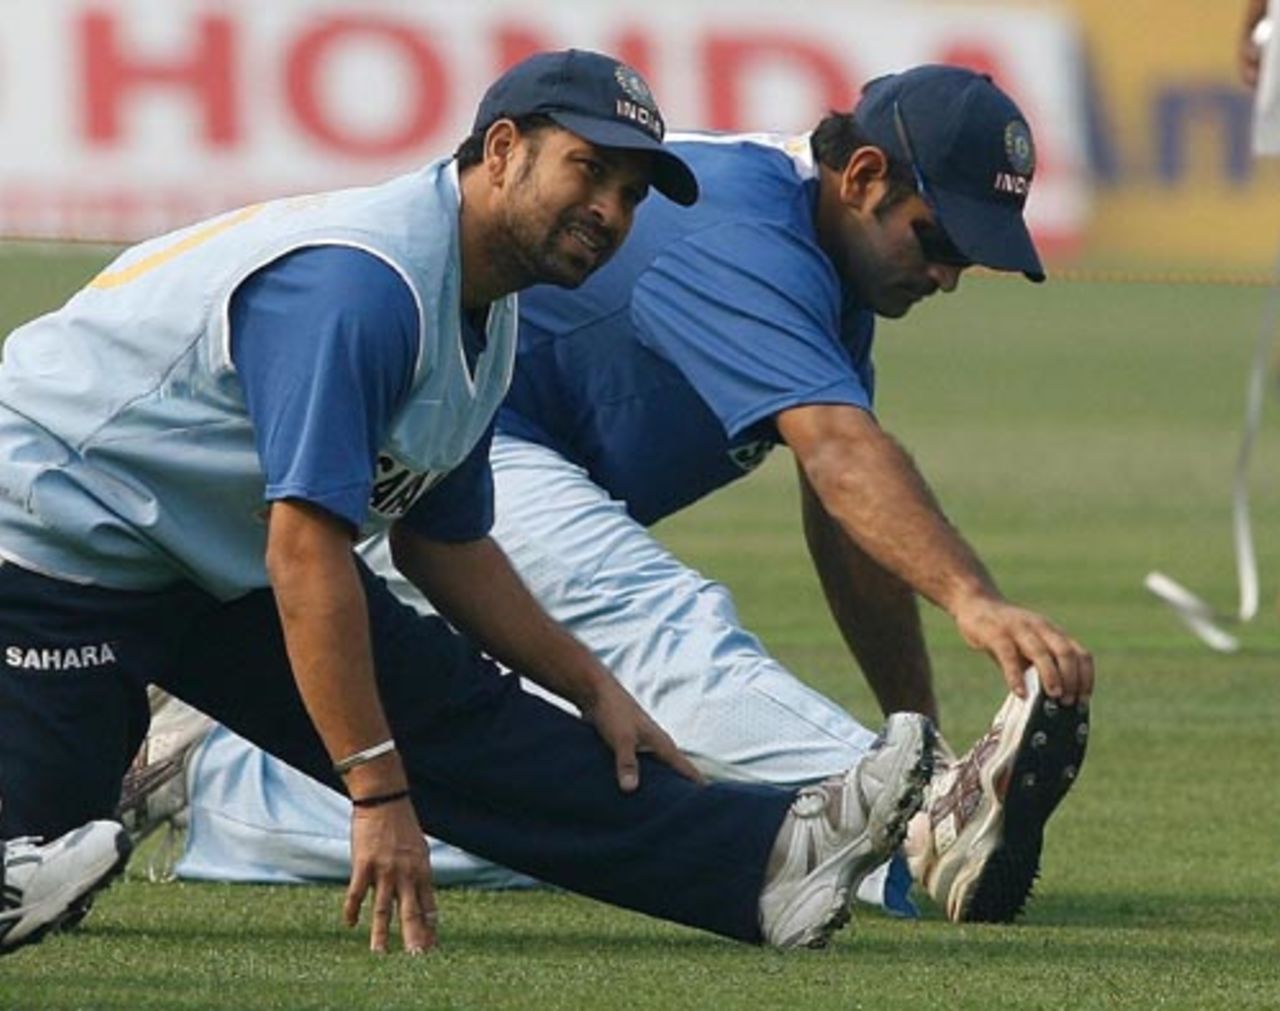 Sachin Tendulkar and Mahendra Singh Dhoni stretch during a warm-up session, Kolkata, November 29, 2007 